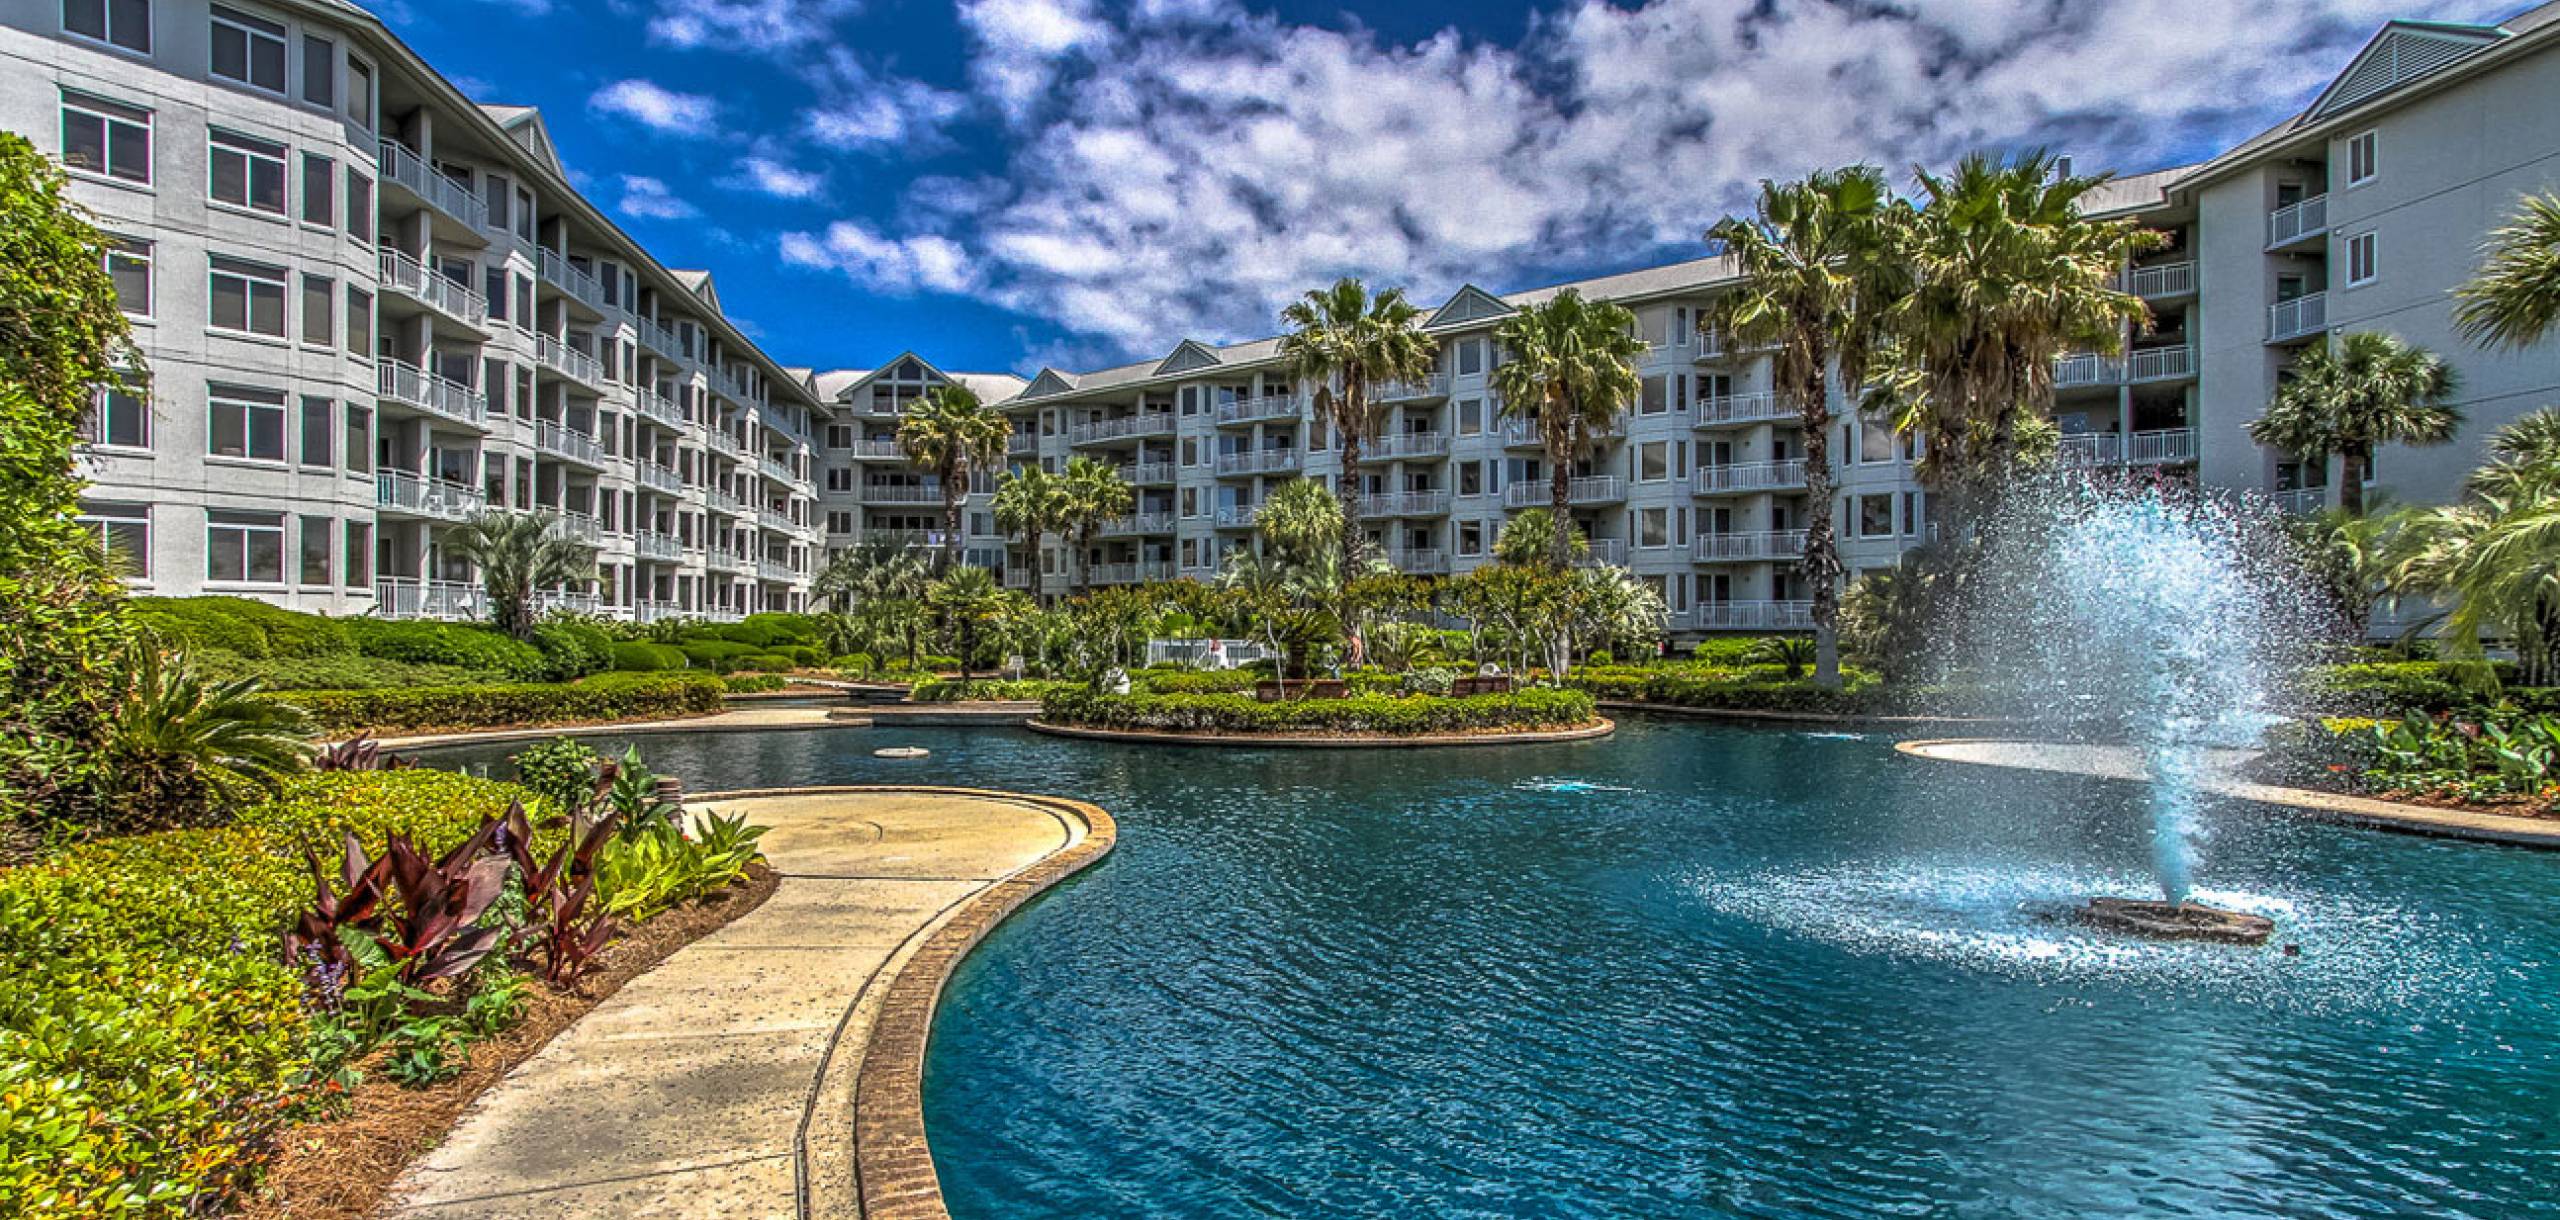 Seacrest property villas hilton head 1502 oceanfront oceanview hiltonheadoceanvillas